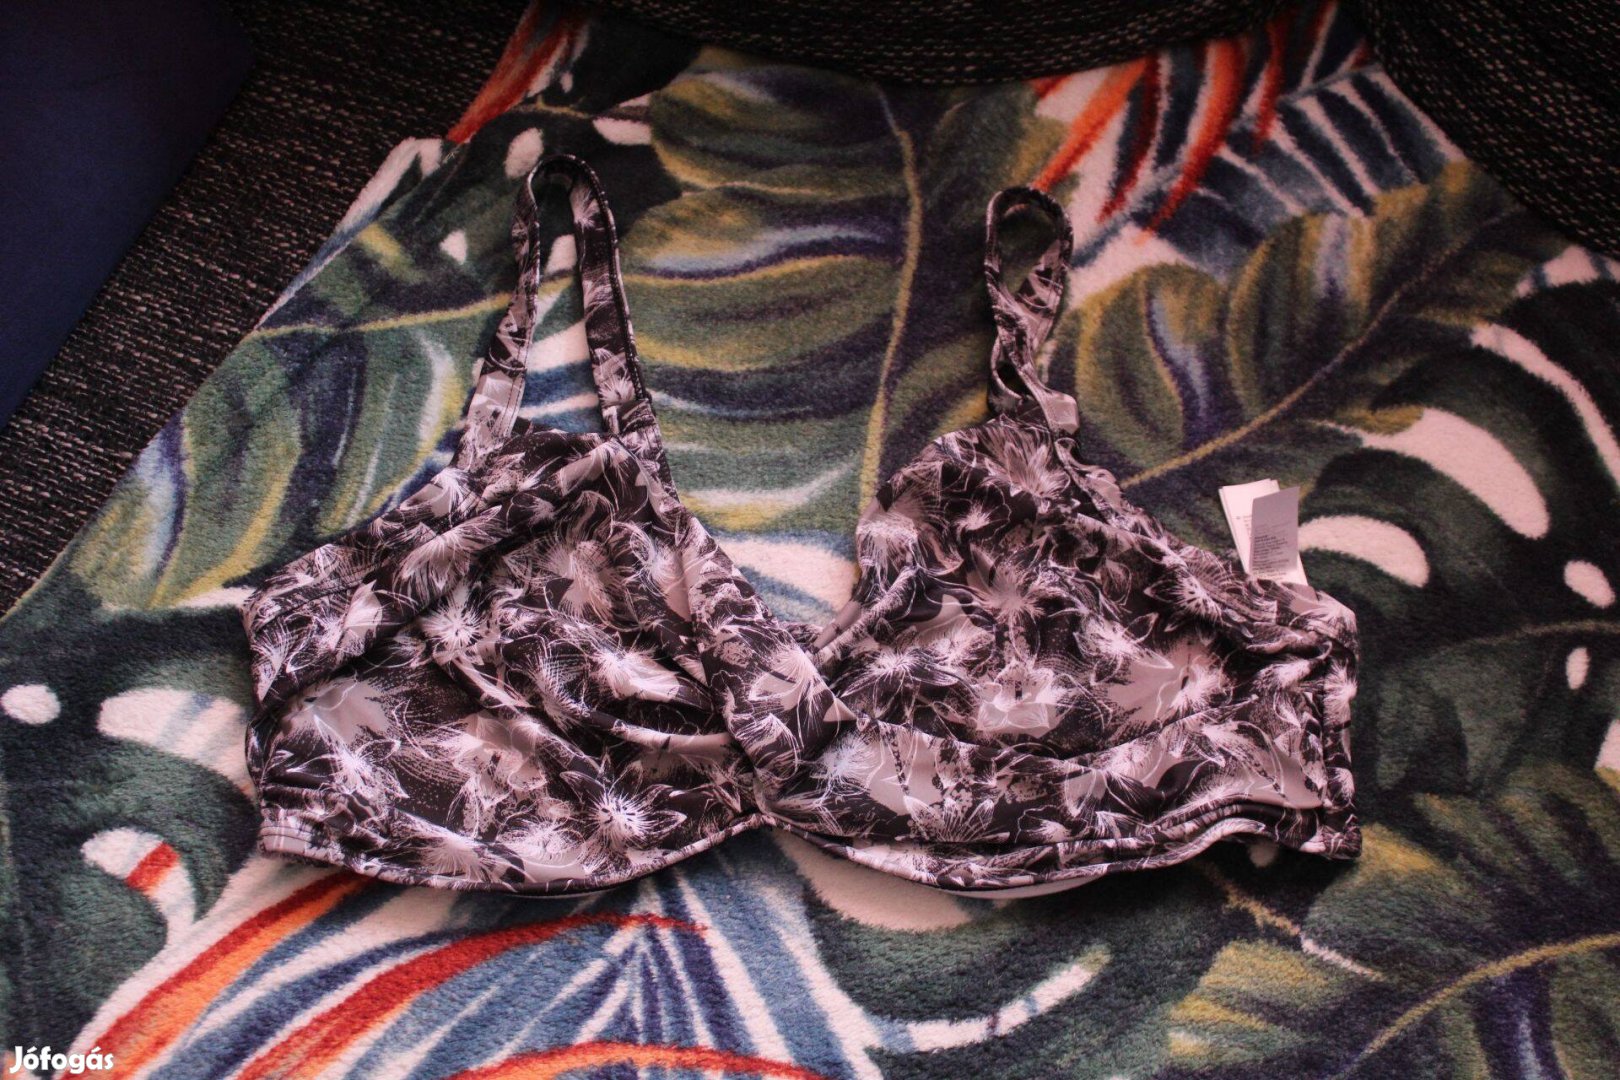 Szurke-fekete-feher virag mintas bikini felso, 95C, Uj